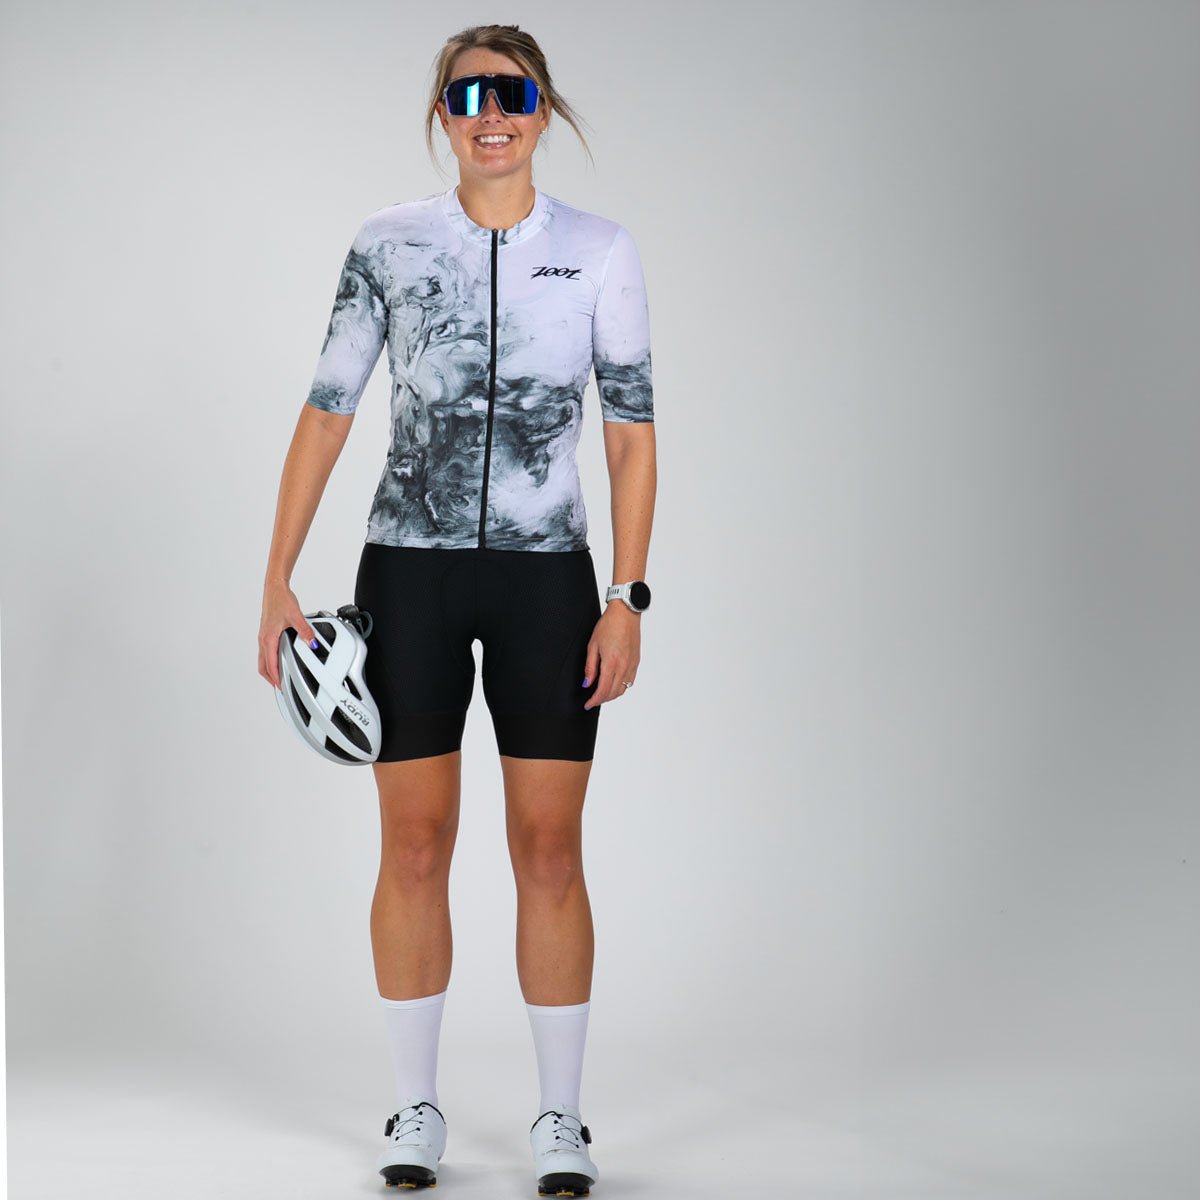 Zoot Sports CYCLE JERSEYS Women's Elite 2.0 Cycle Aero Jersey - White Hot